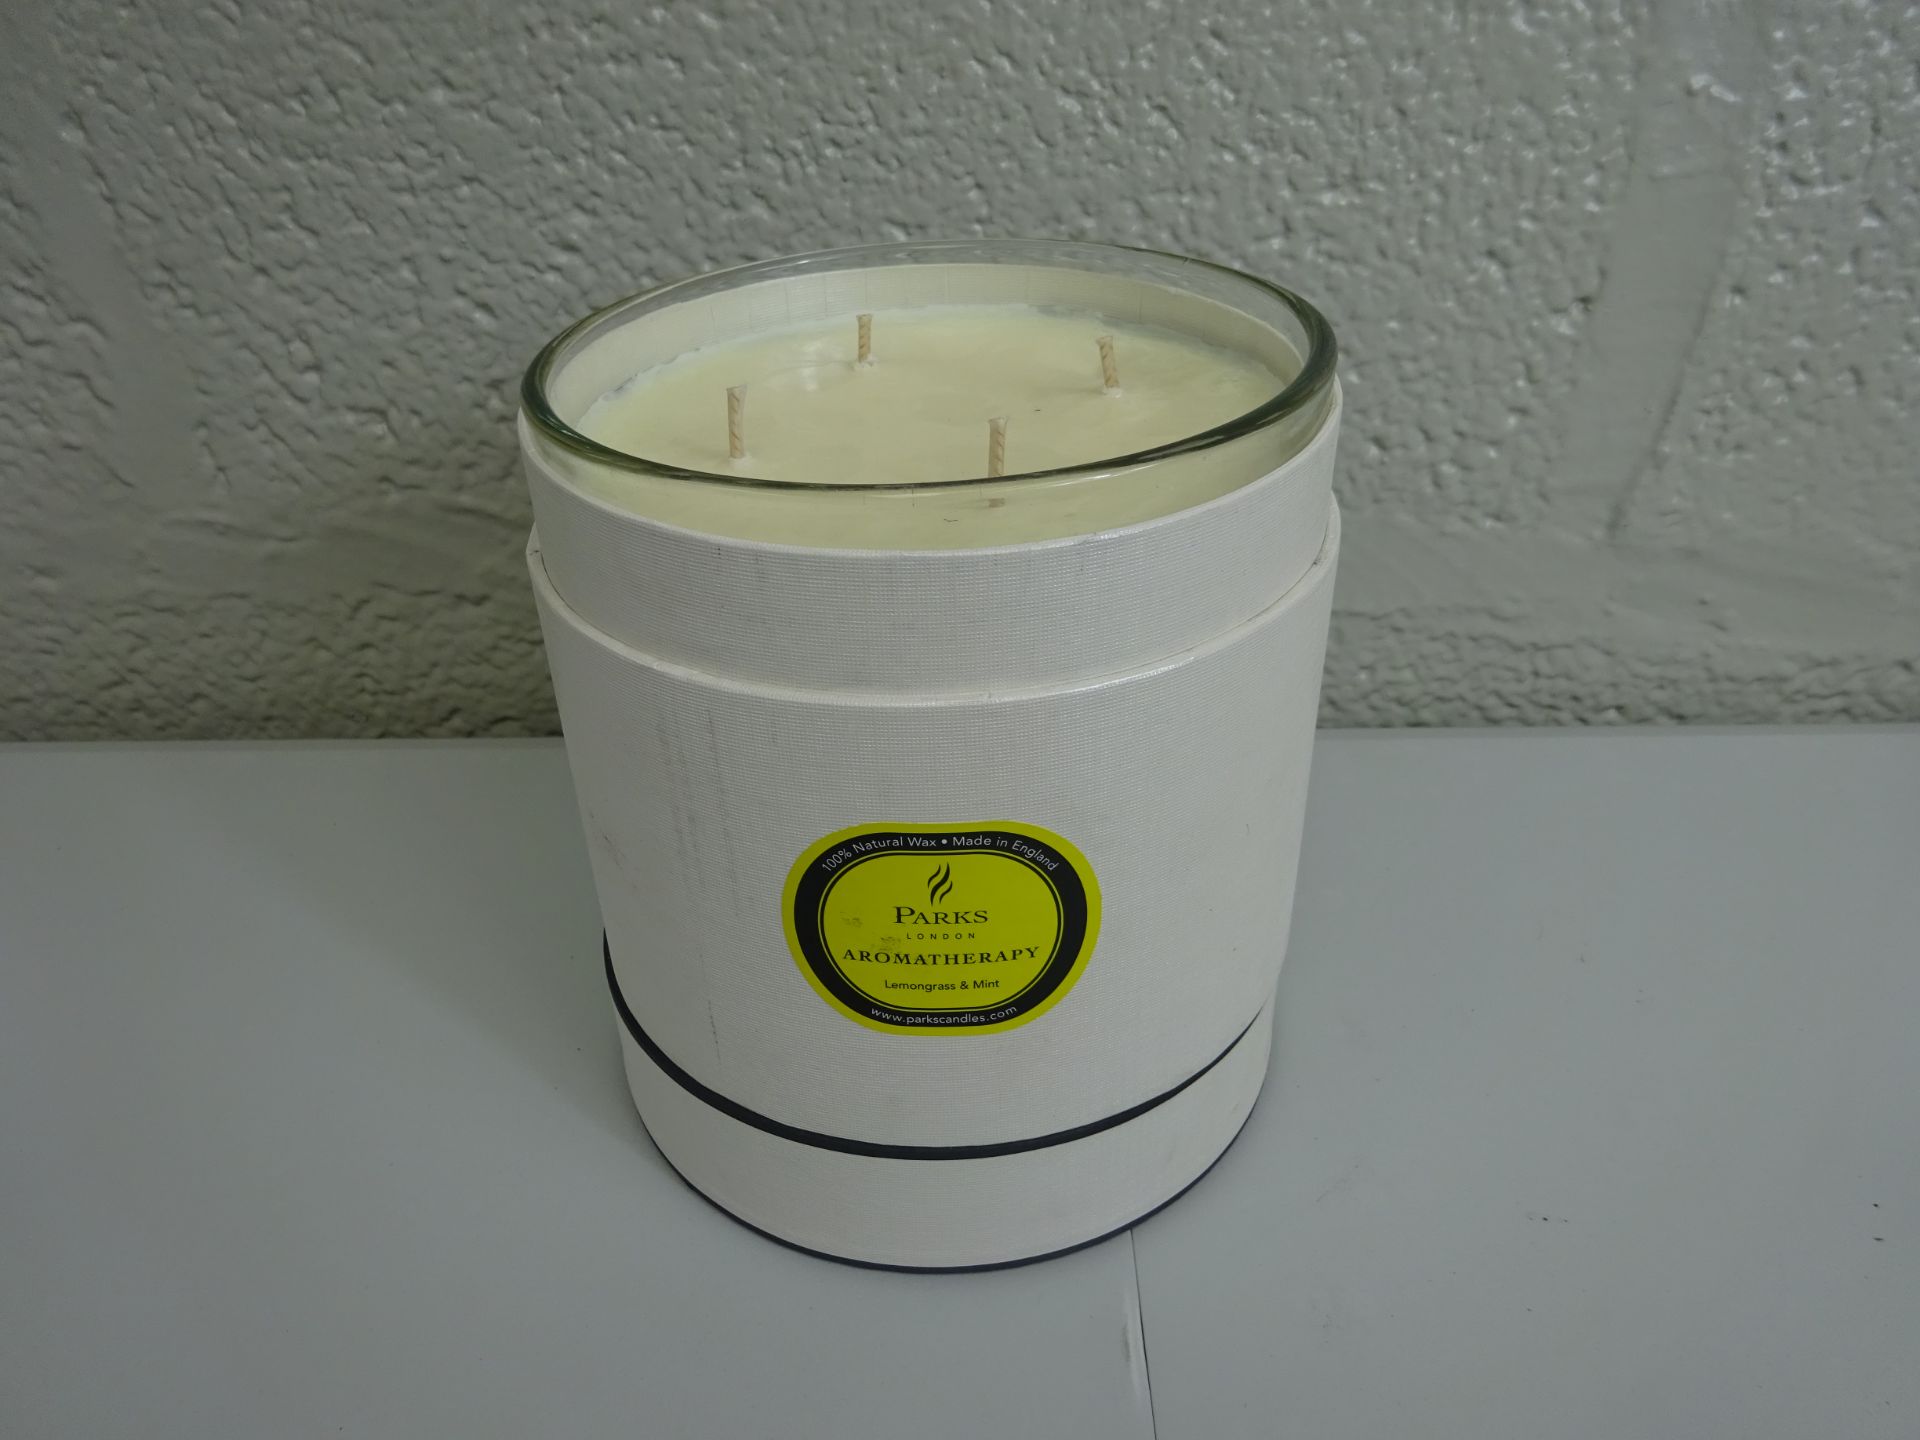 Parks London lemongrass & mint scented candle - RRP £144.00